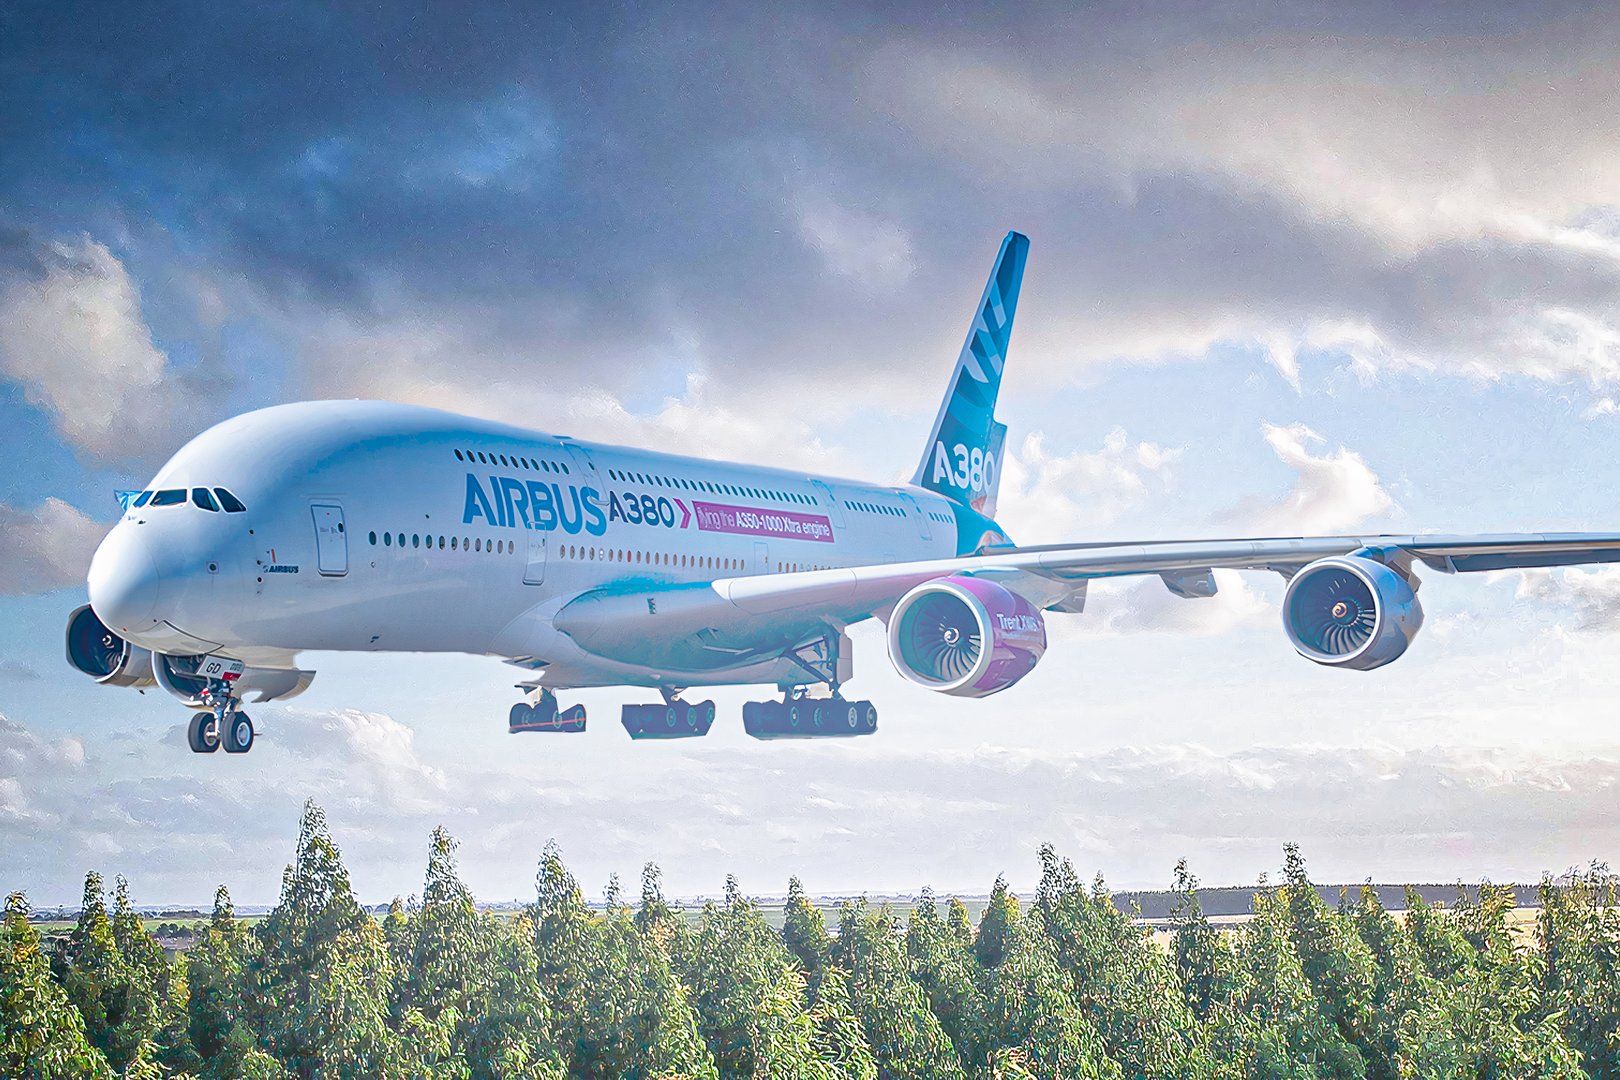 An Airbus A380 landing